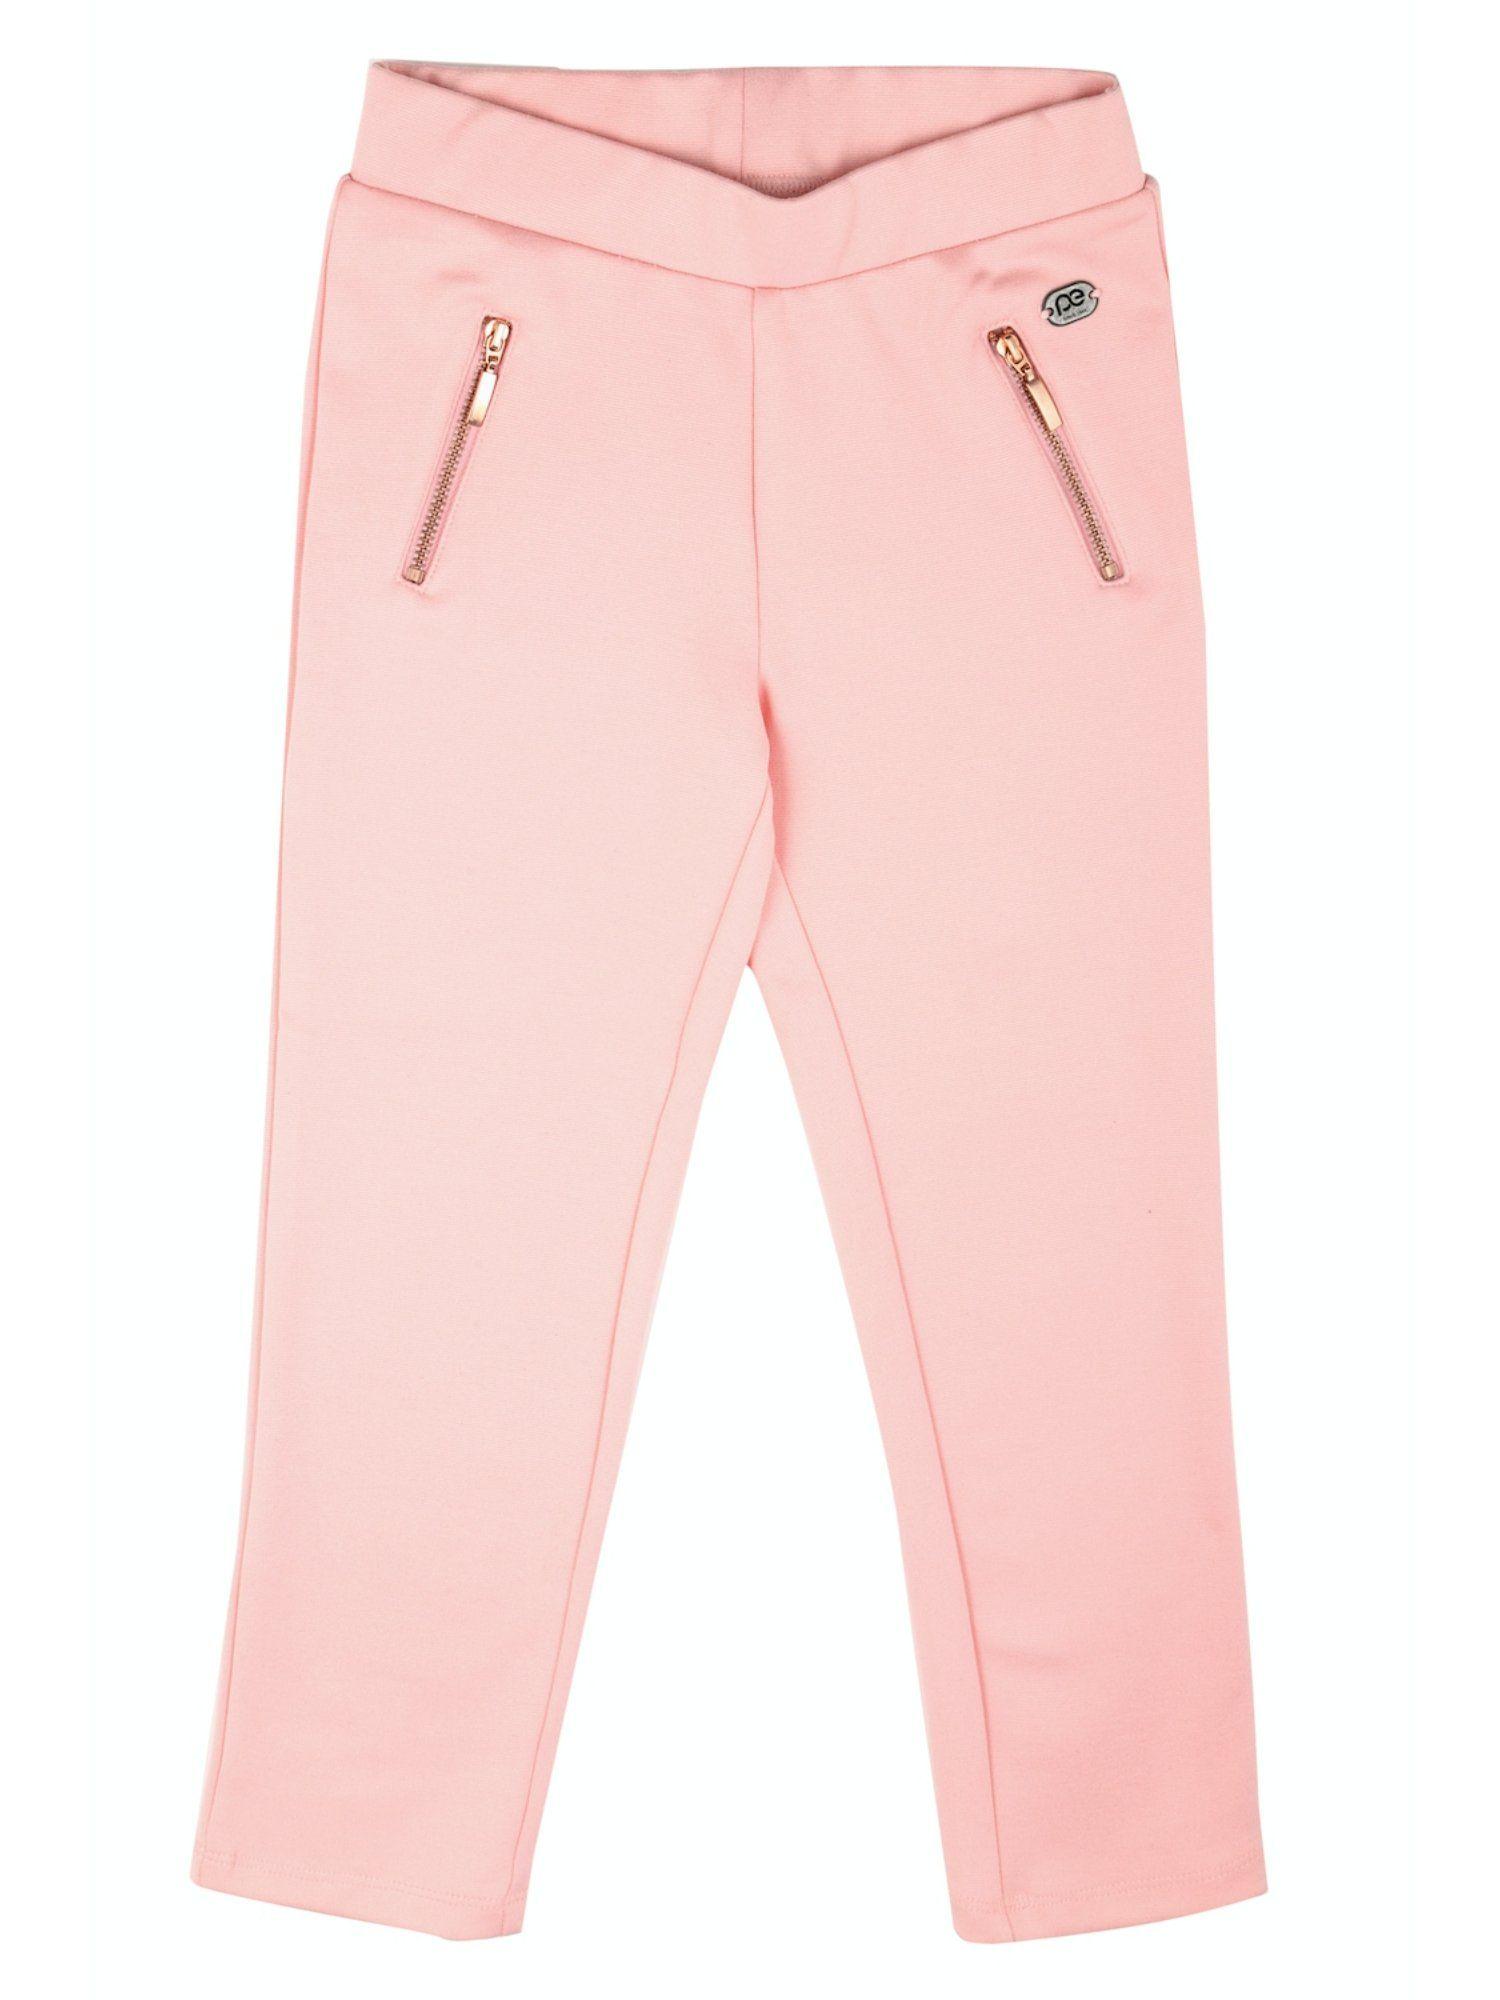 girls-pink-solid-leggings